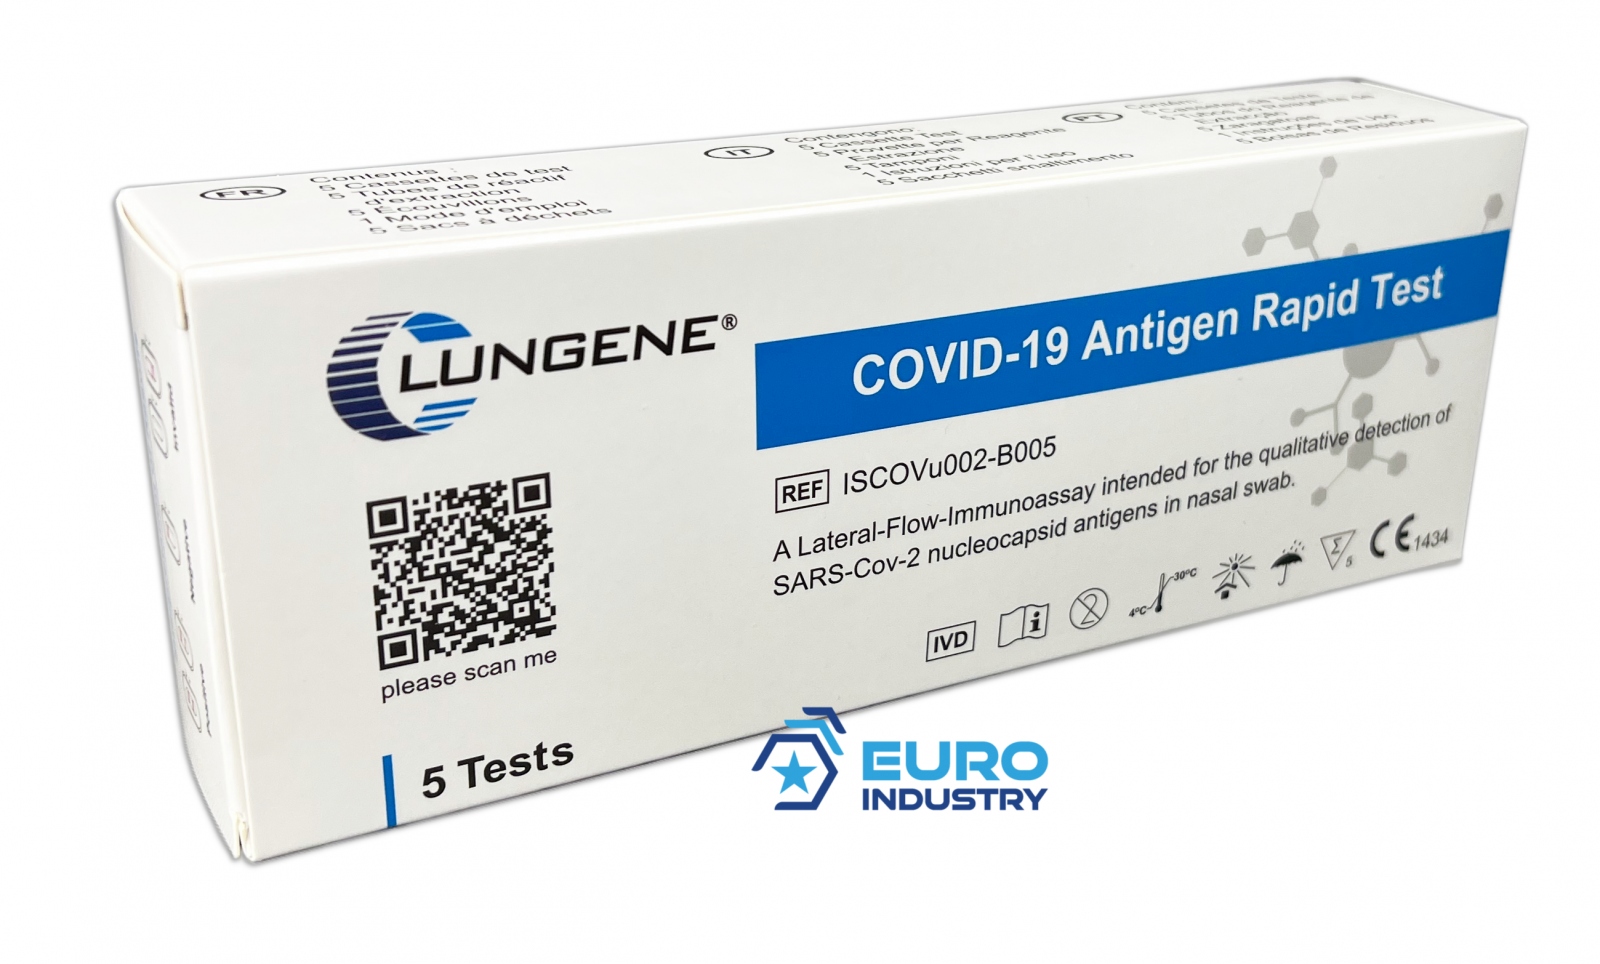 pics/Clungene/clungene-covid19-profi-antigen-rapid-test-pack-of-5-tests-l.jpg